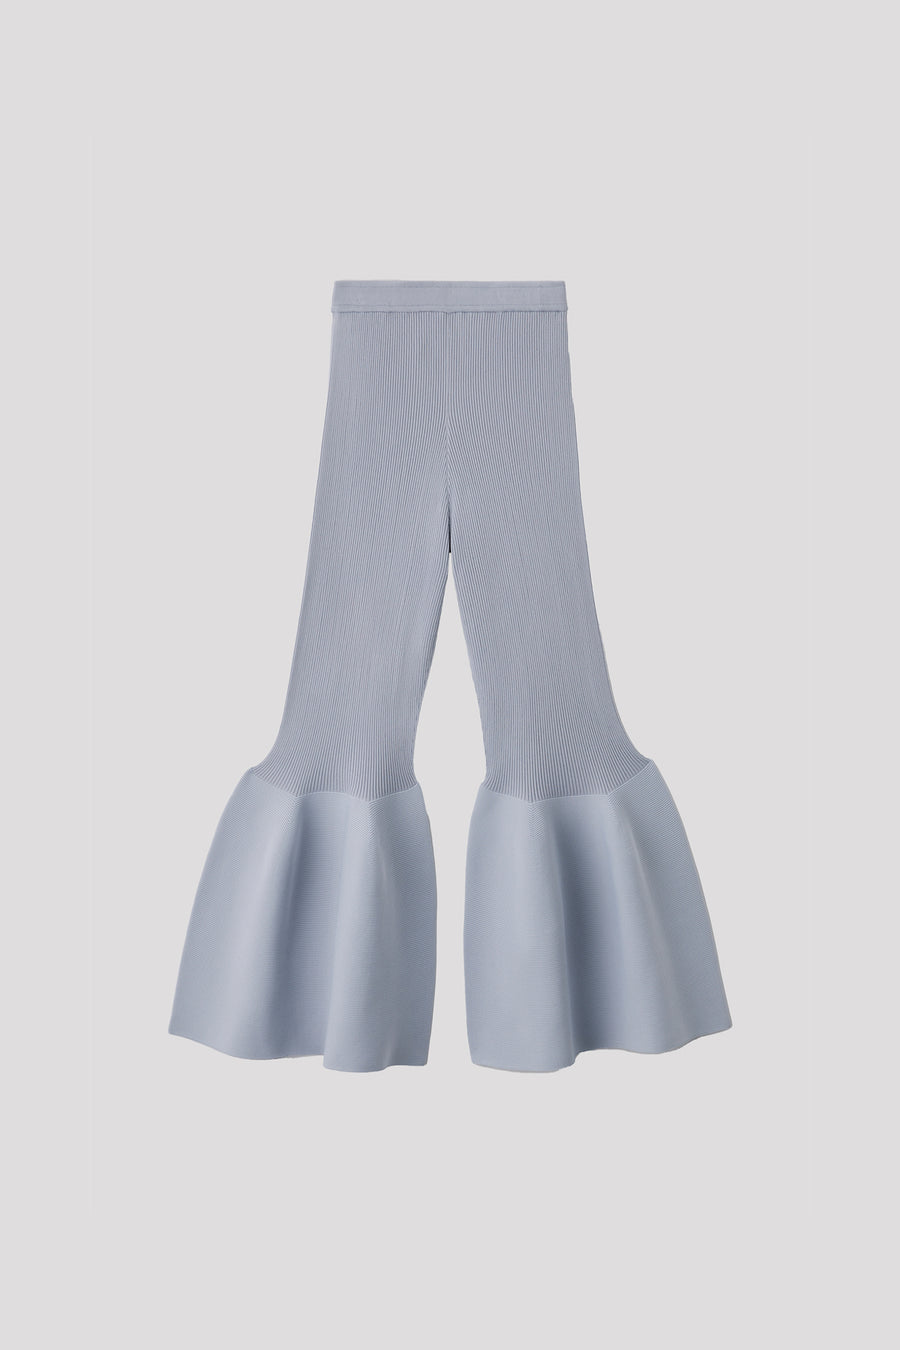 CFCL POTTERY CUPRO BELL BOTTOM PANTS パンツ使用頻度は4〜5回程度です